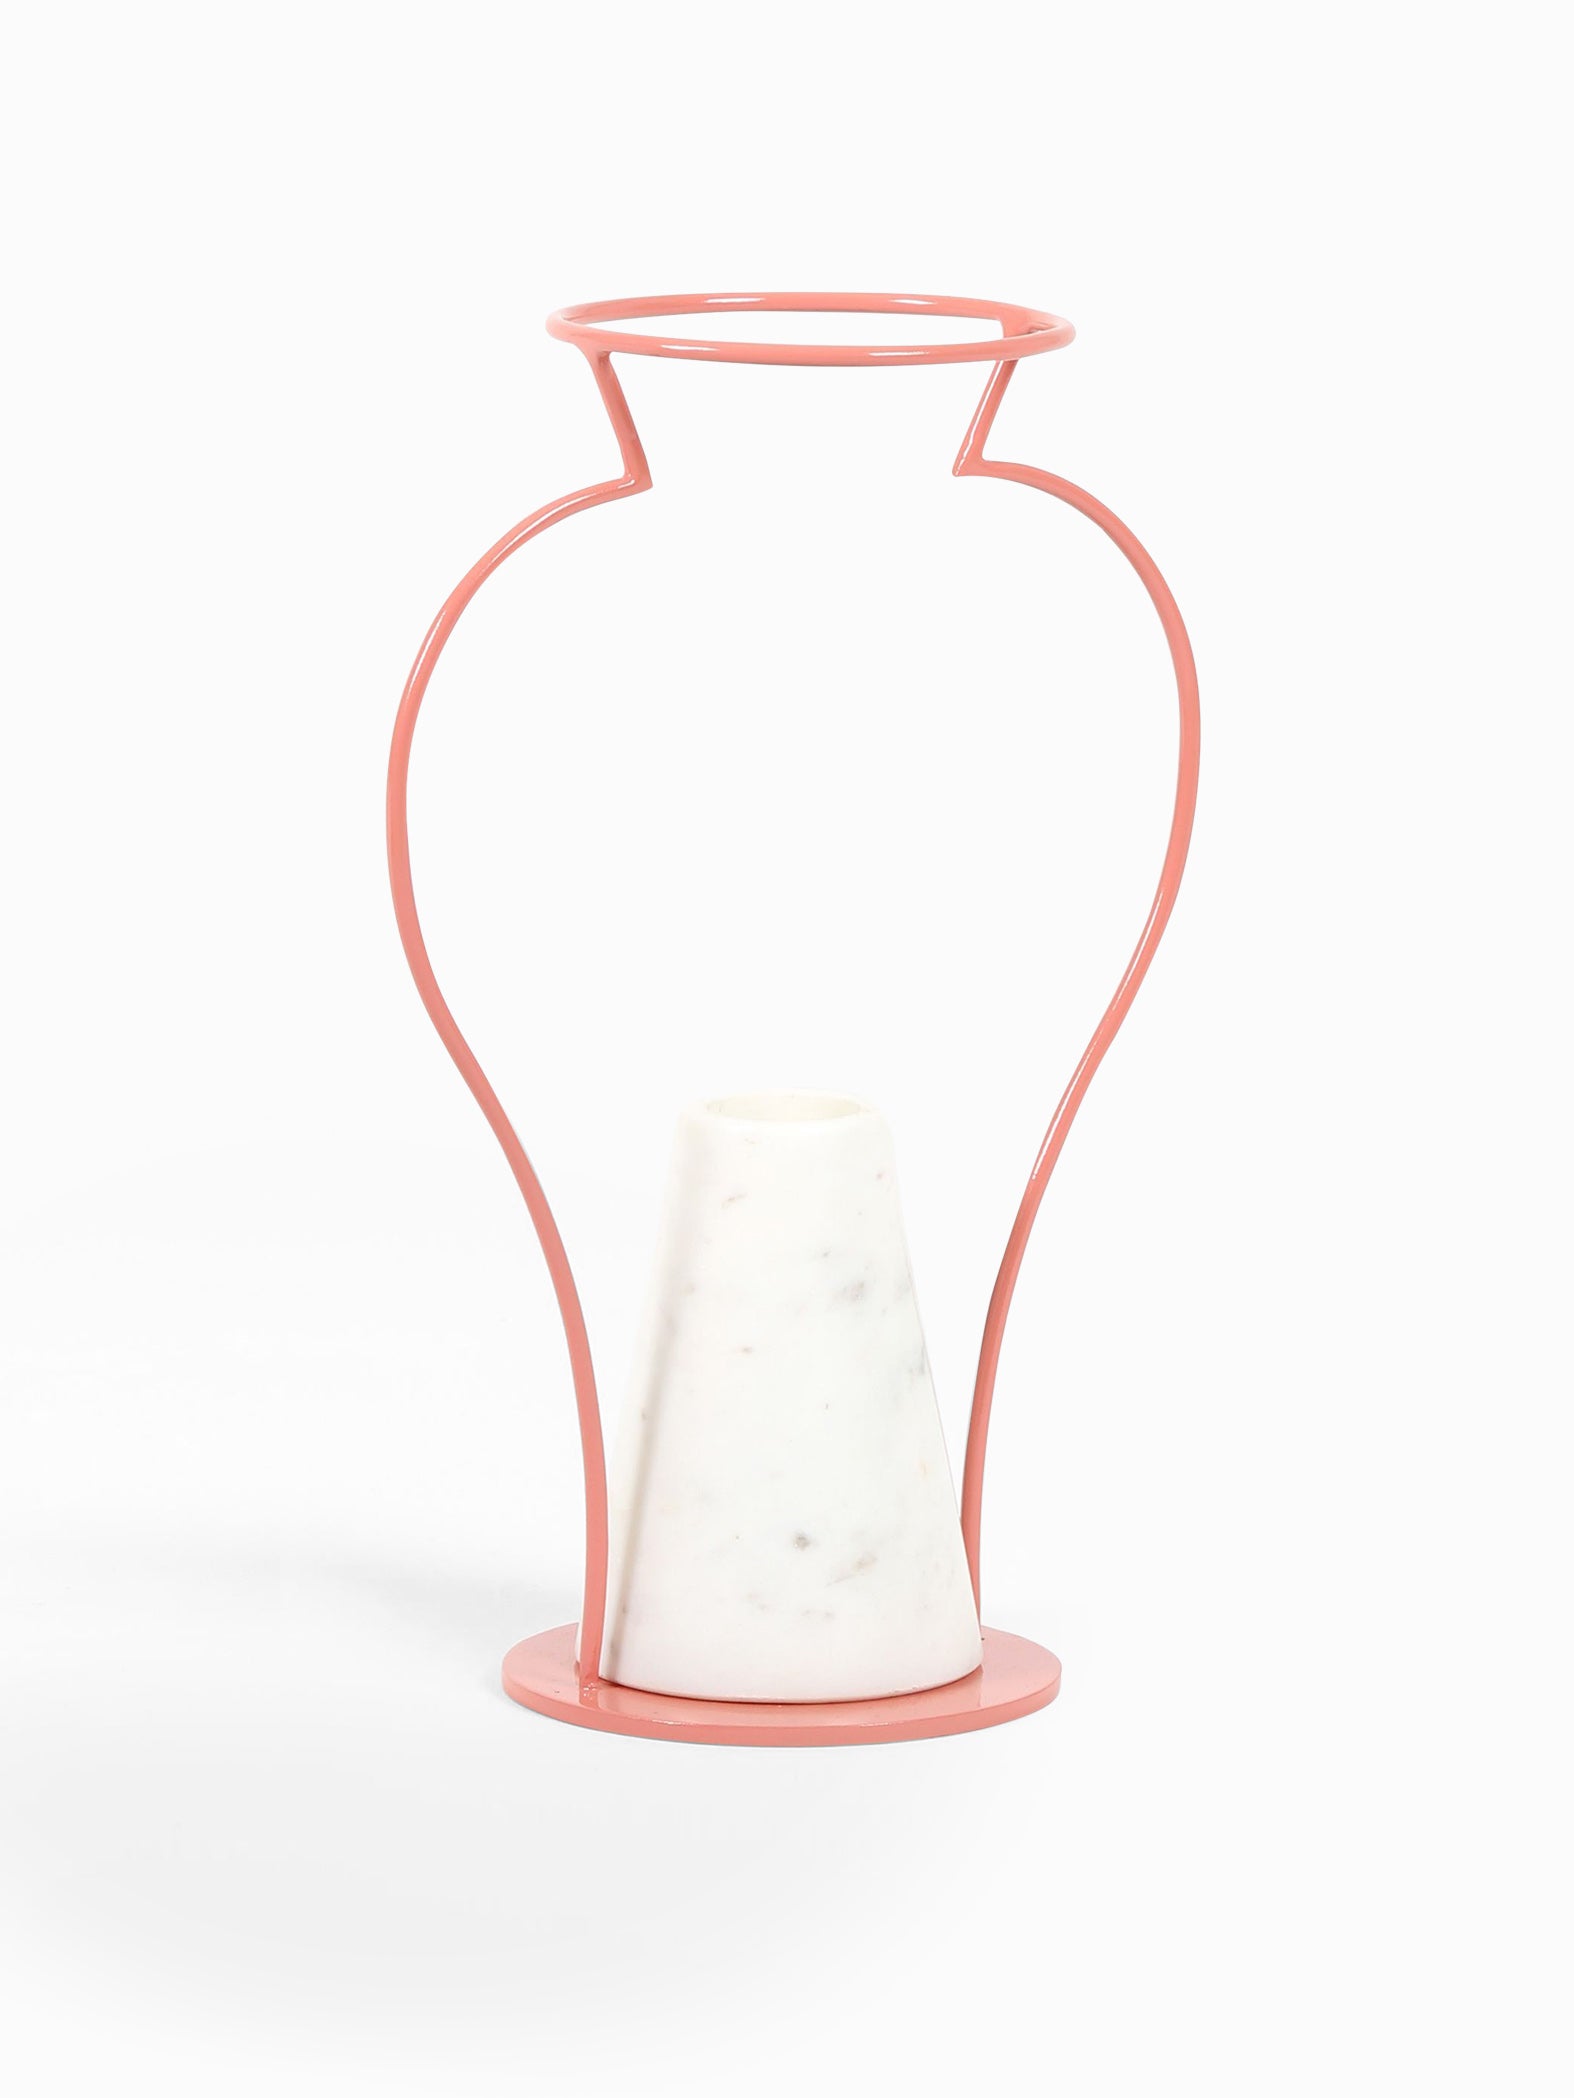 Gulbagh Vase Medium by Anantaya